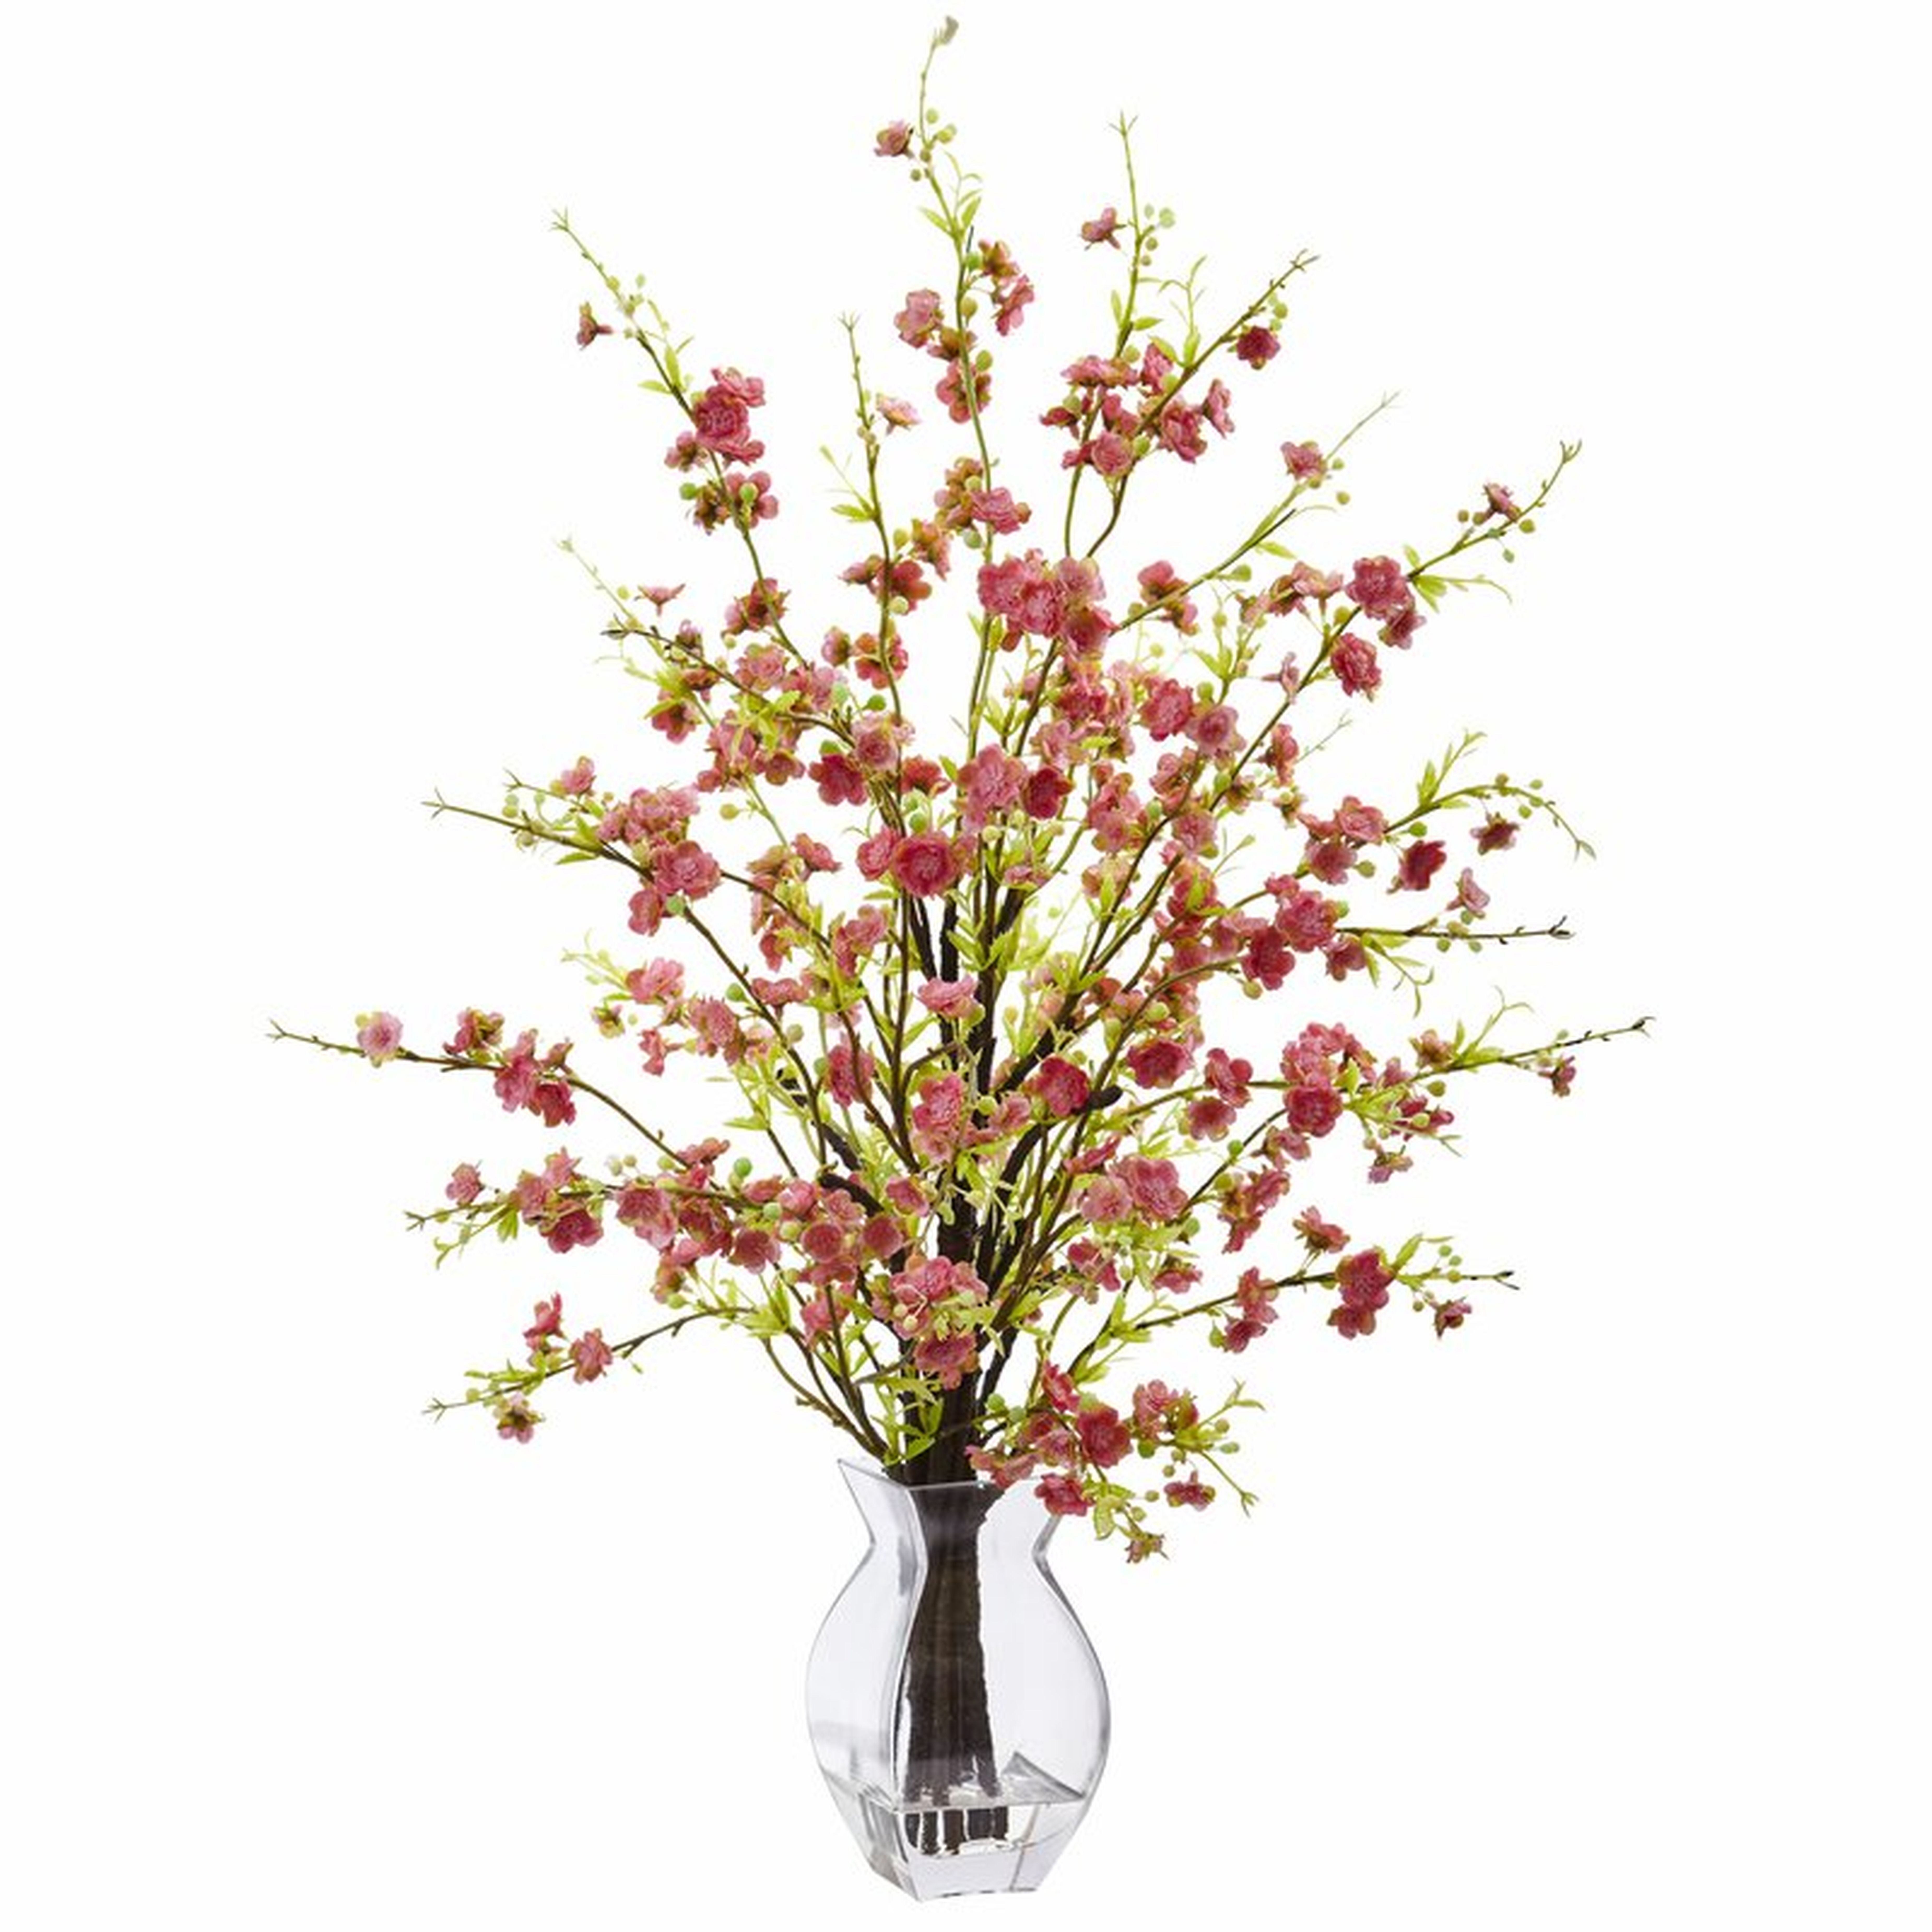 Cherry Blossom Floral Arrangements in Decorative Vase - Wayfair